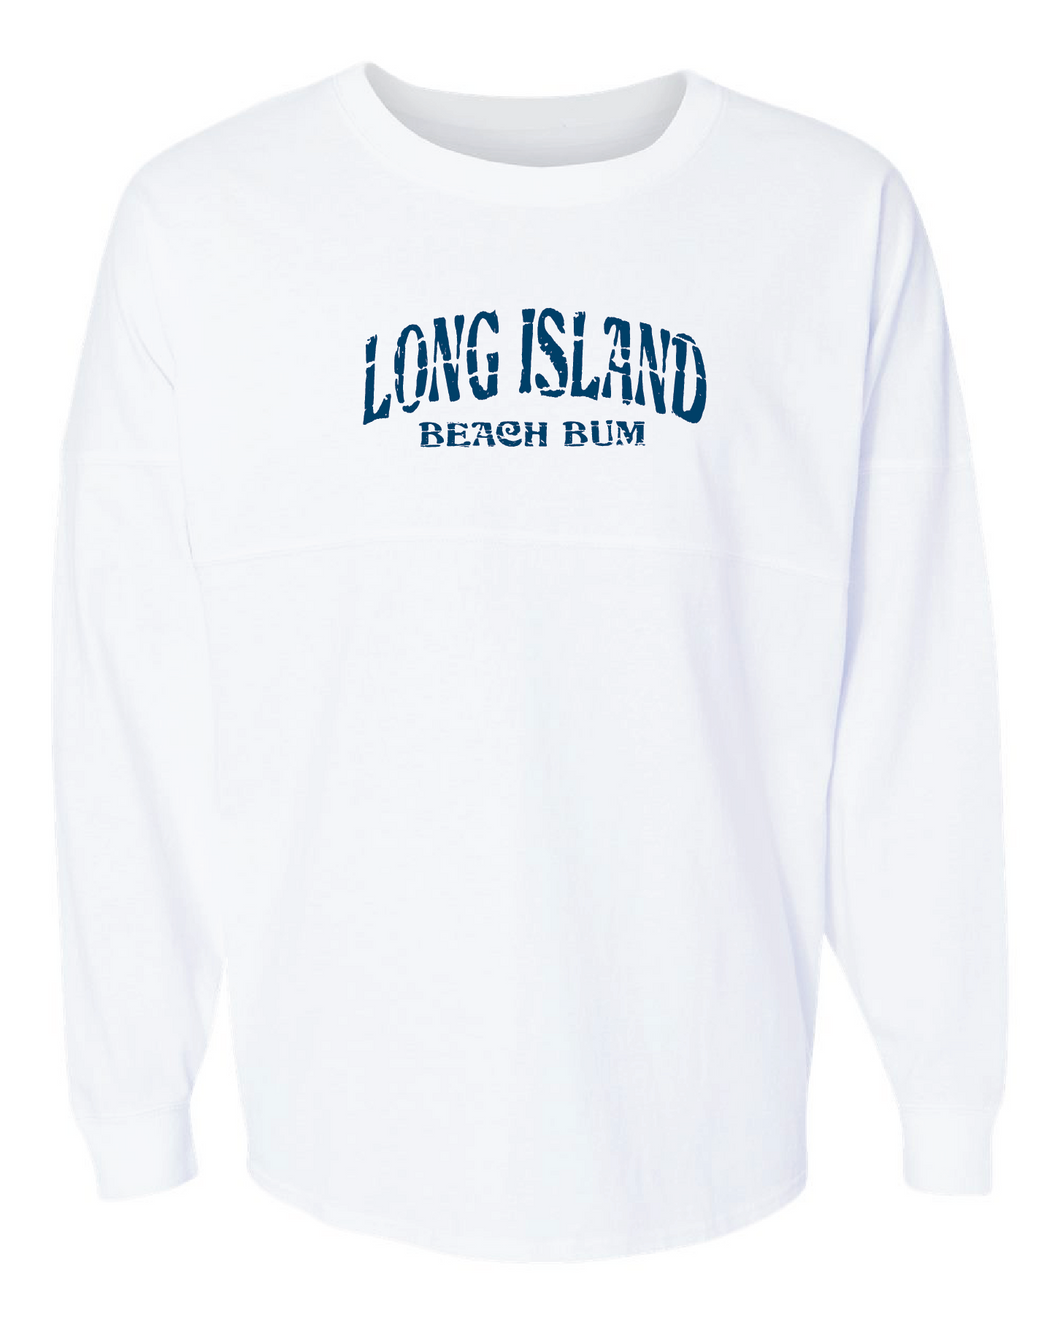 SALE: Long Island Beach Bum Long Sleeve Game Day Tee